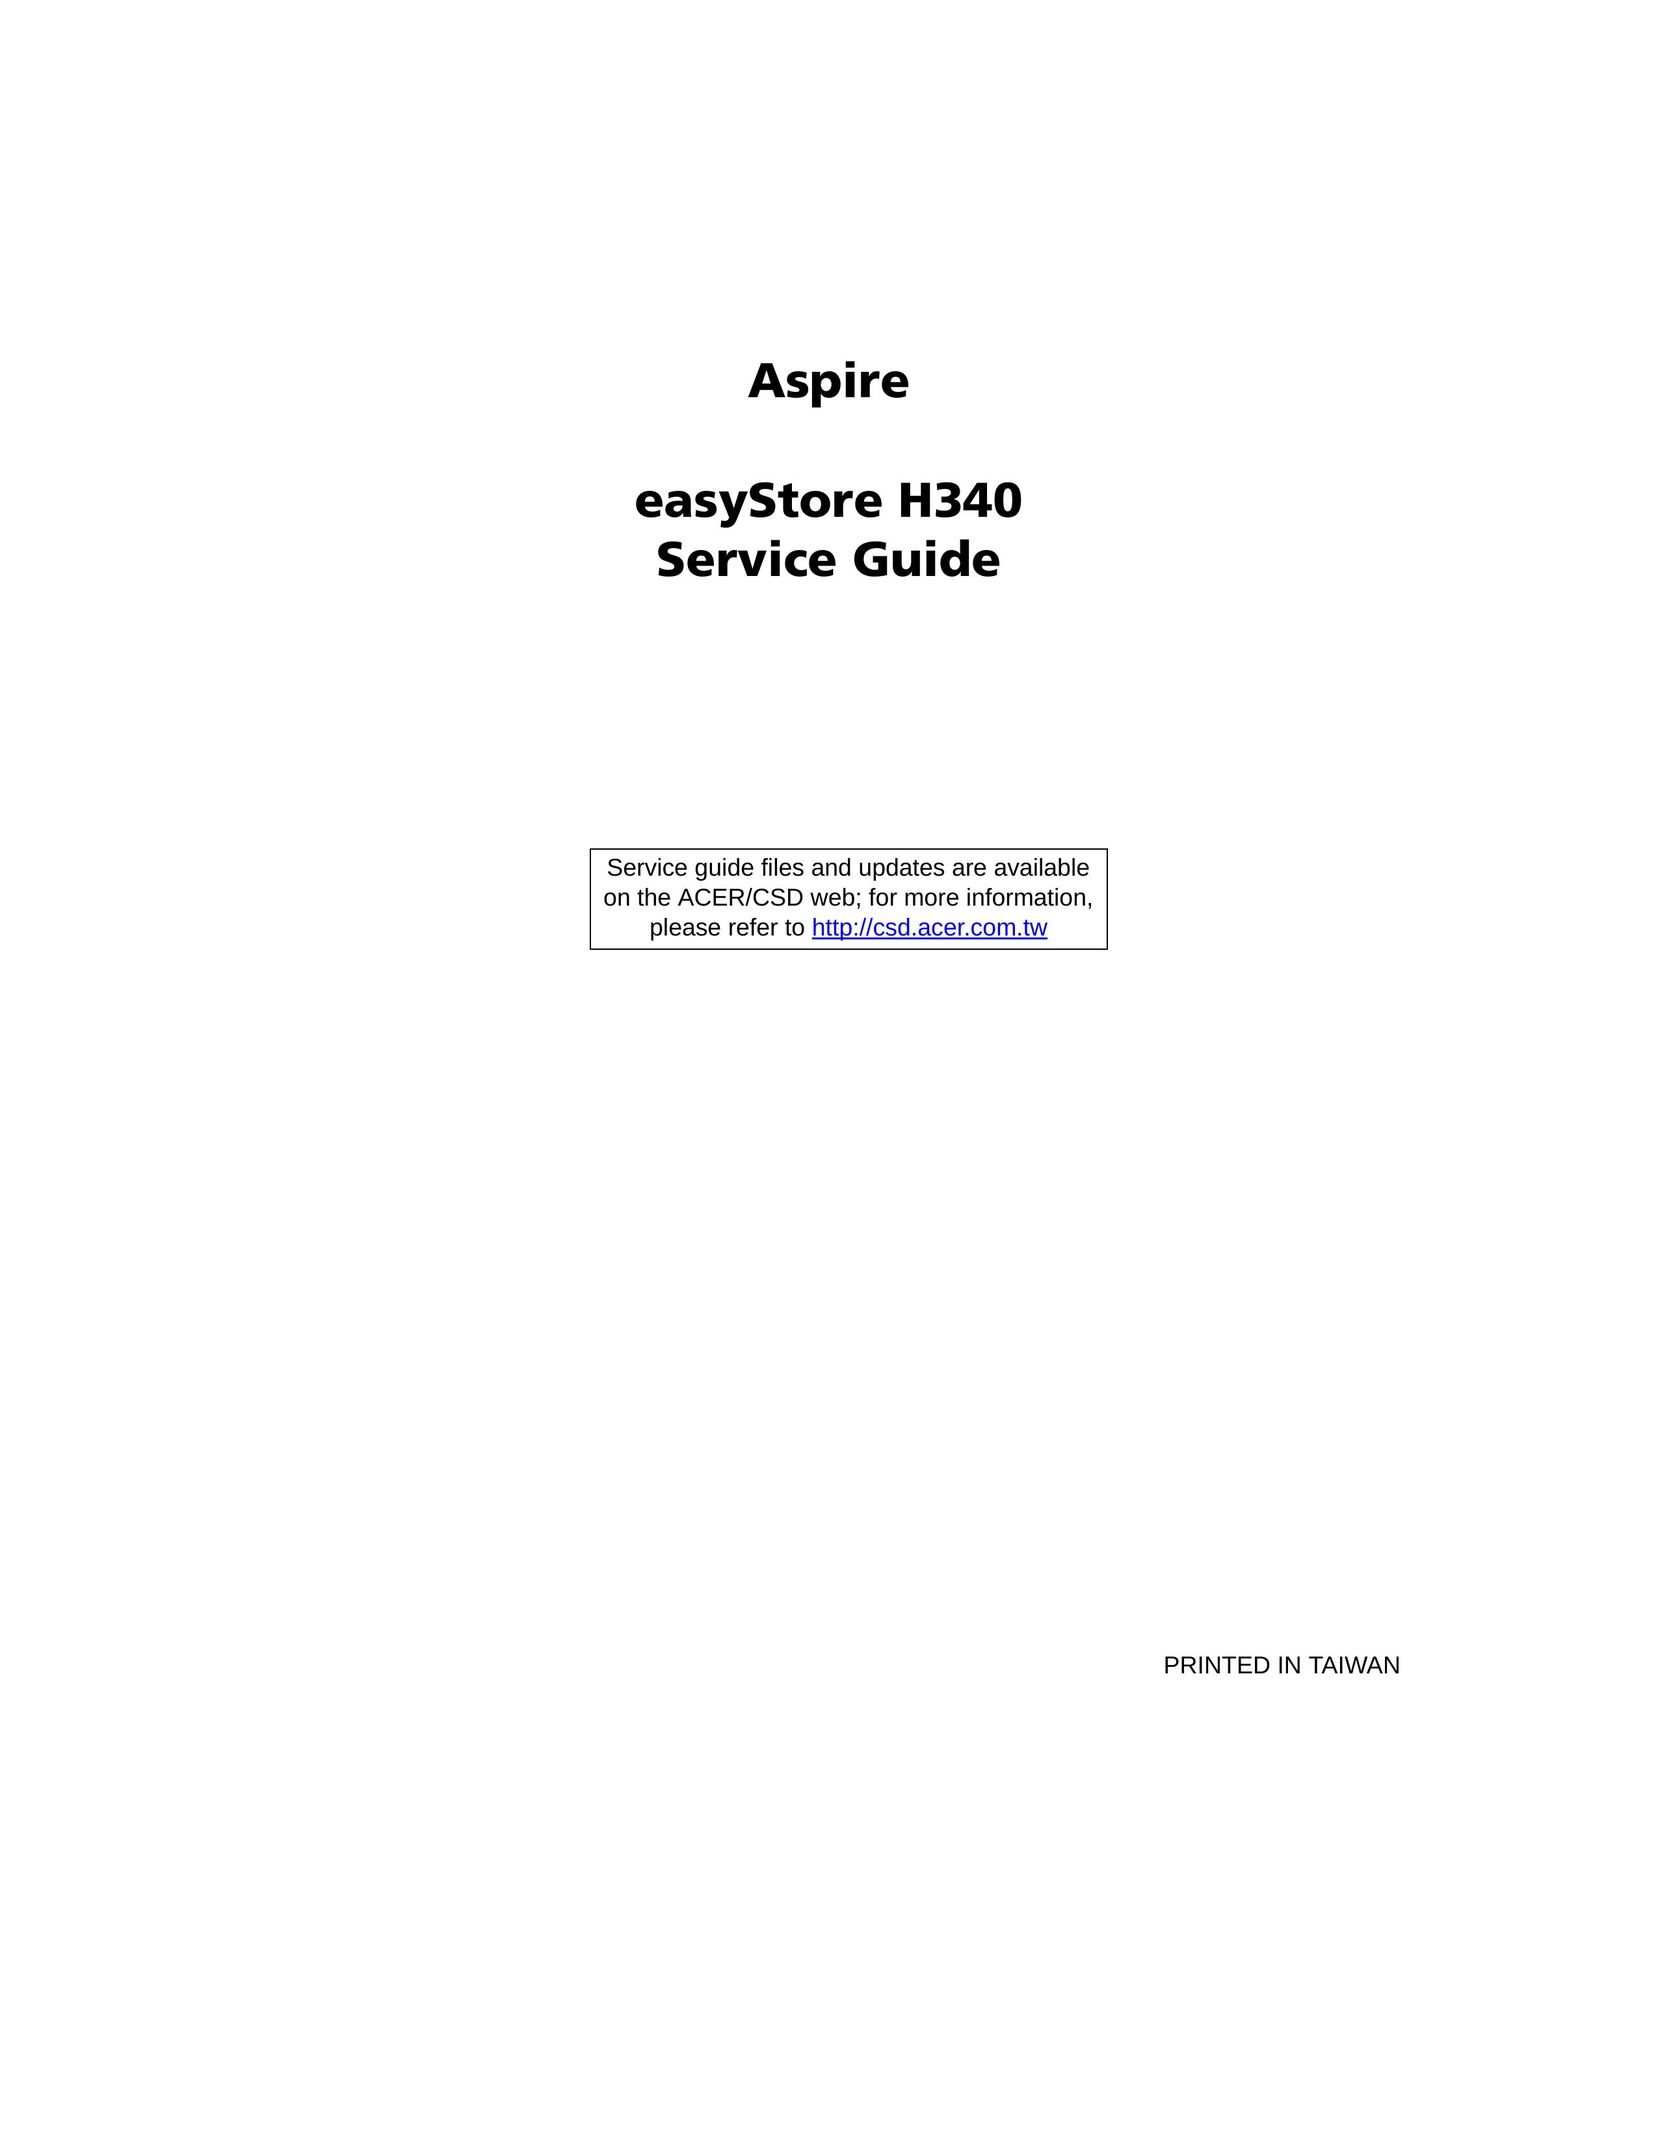 Aspire Digital GU342G0ALEPR692C6CE Can Opener User Manual